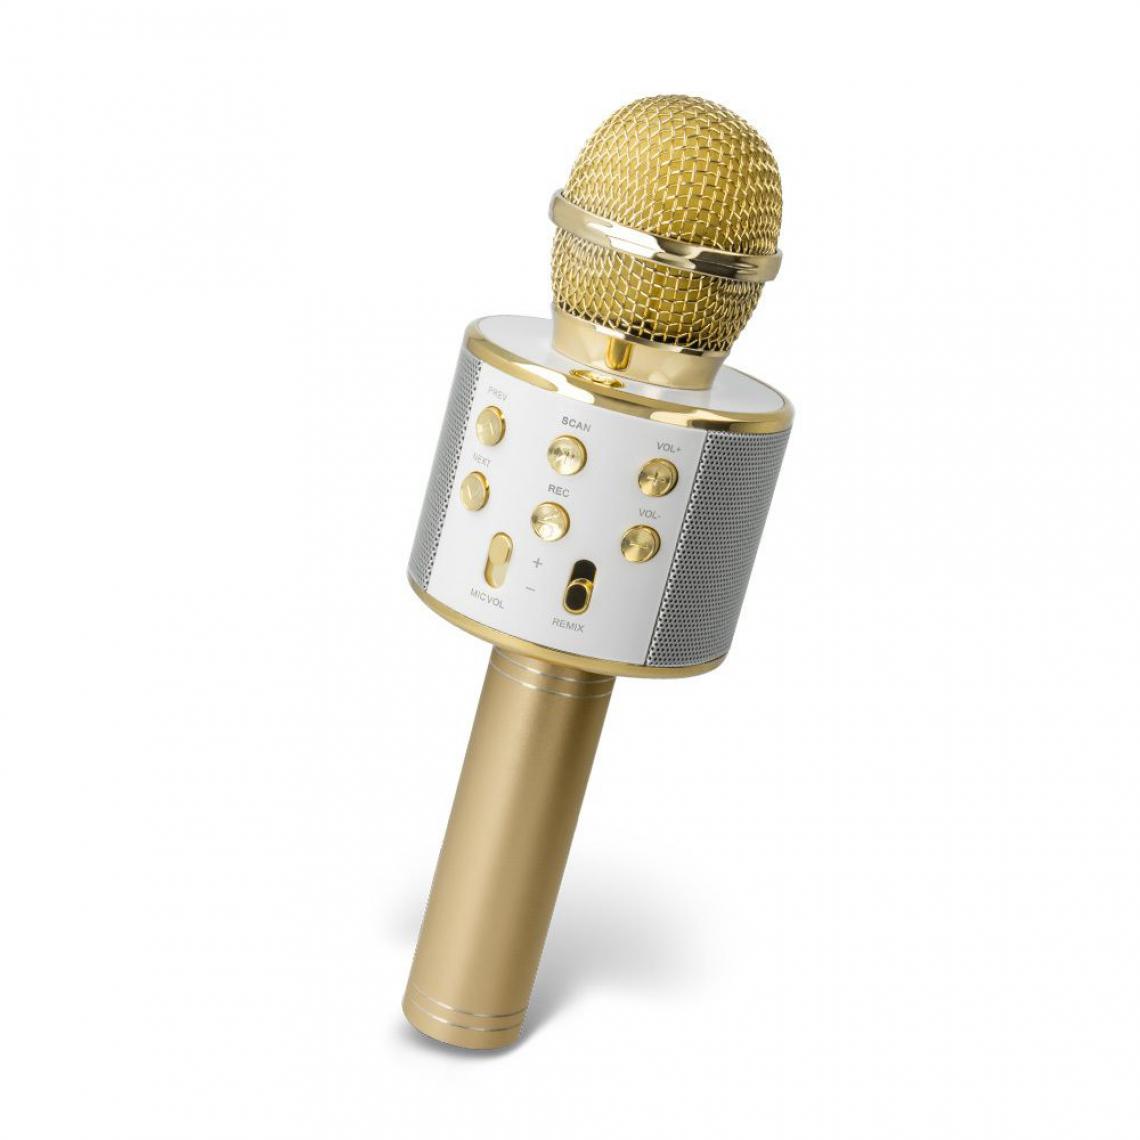 Ozzzo - Microphone Karaoke bluetooth haut parleur ozzzo Gold Or pour OnePlus 8 Pro - Autres accessoires smartphone